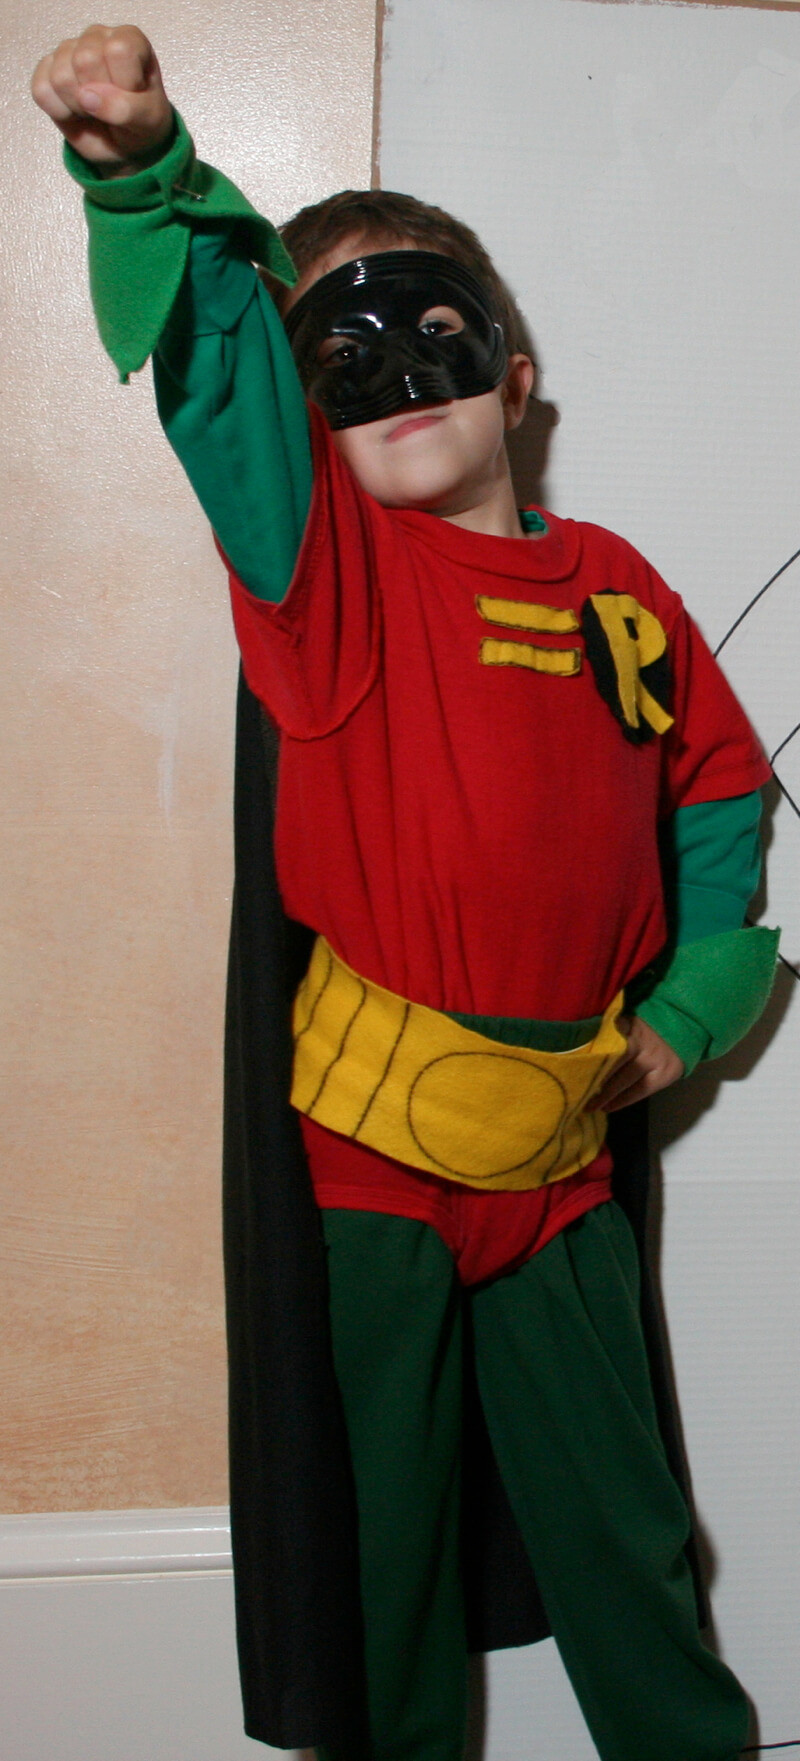 DIY Superhero Costumes For Kids
 12 DIY Superhero Costume Ideas for Kids